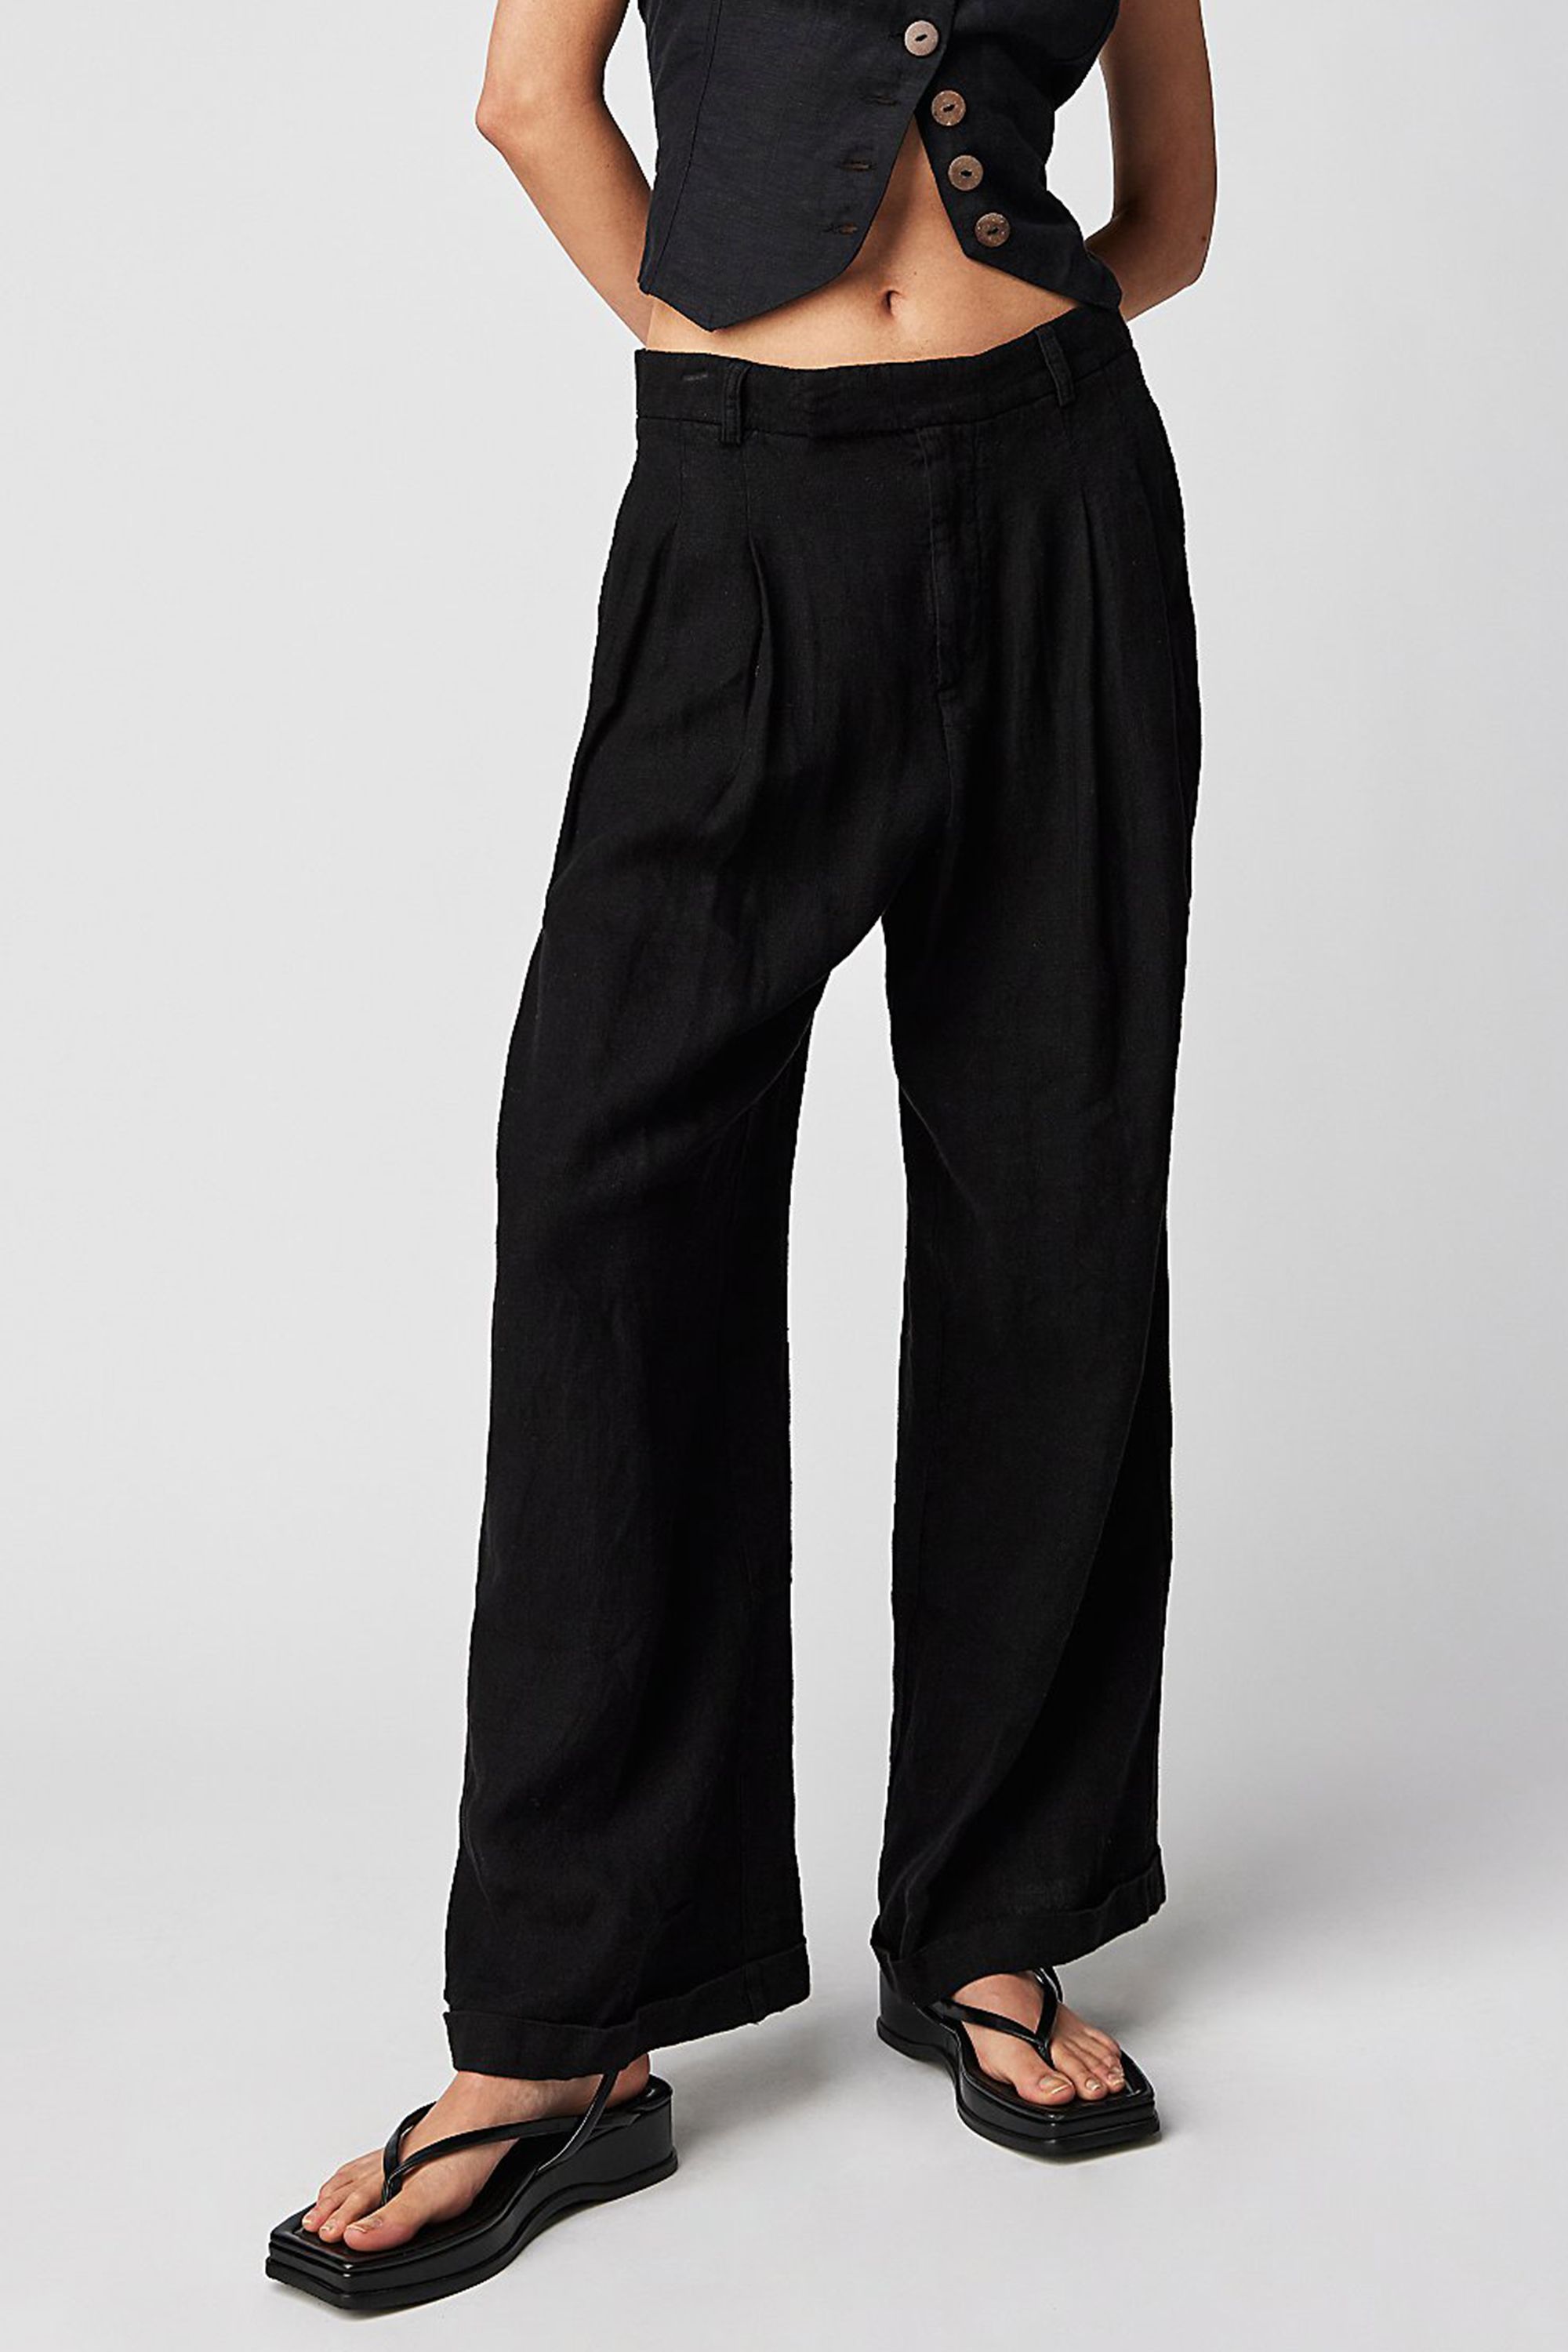 Spring/Summer Thin Pants Mens Plaid Home Pants Loose Comfy Home Pajama  Trousers | eBay